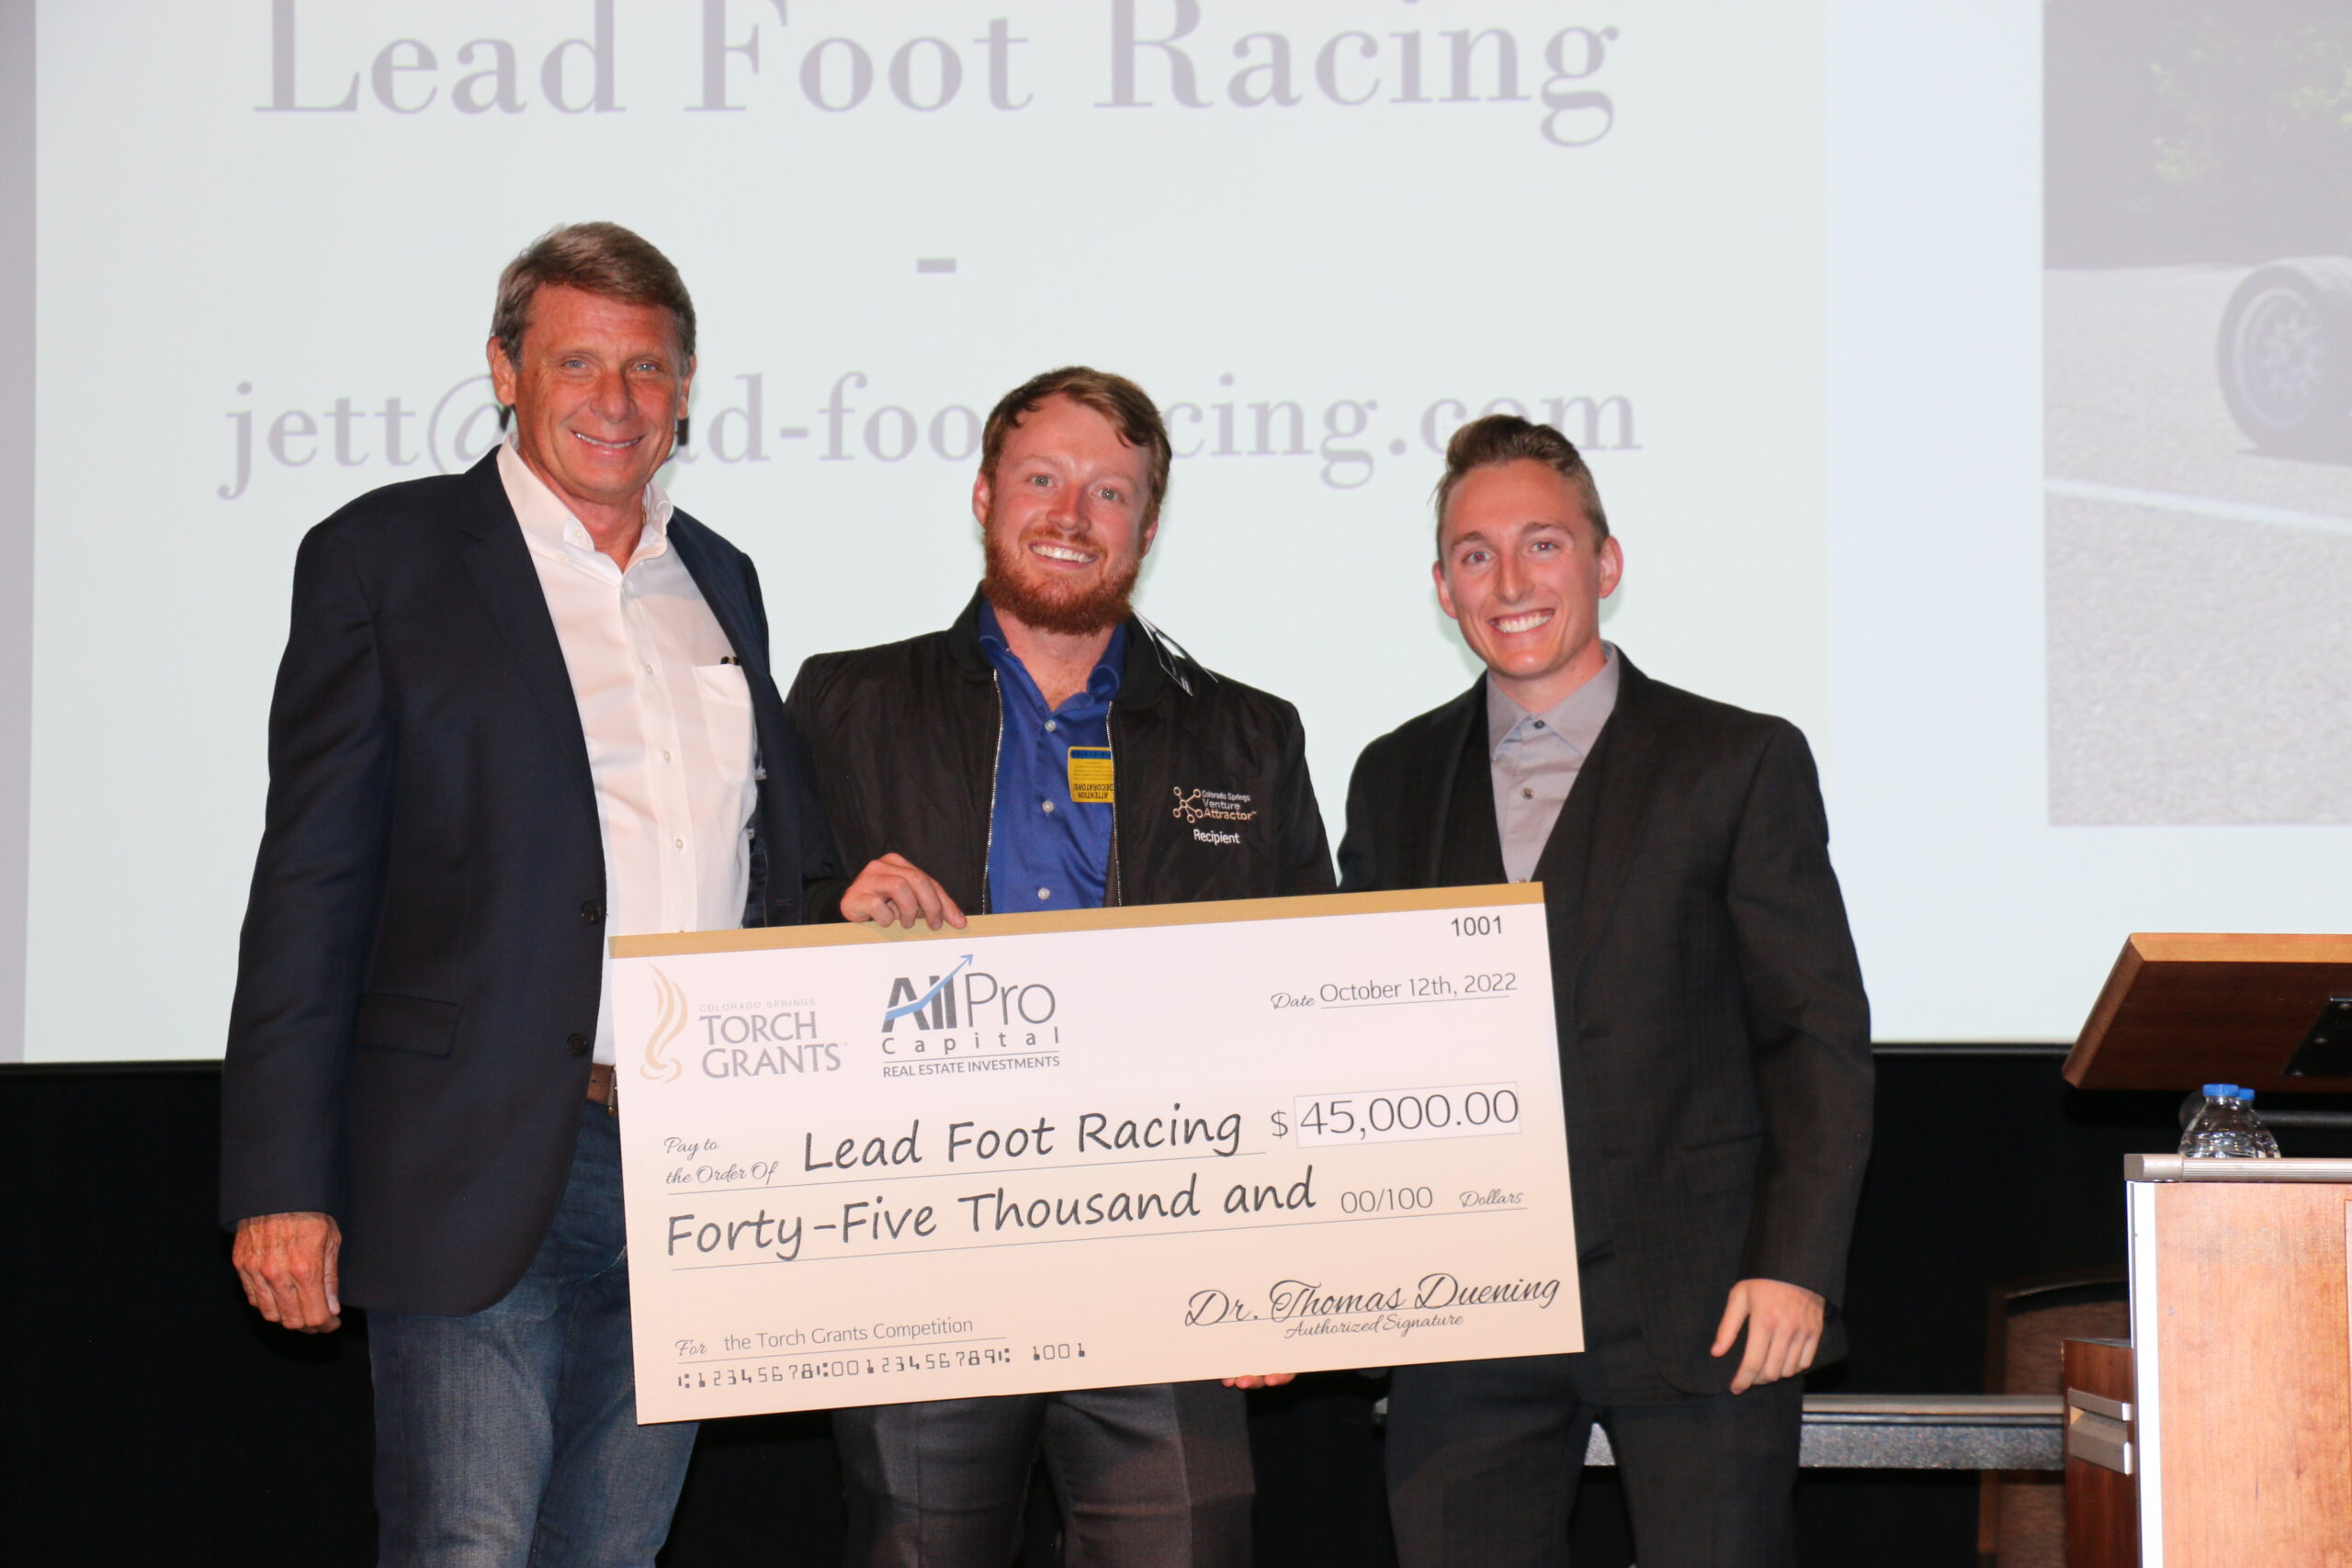 Lead Foot Racing receives a Torch Grants